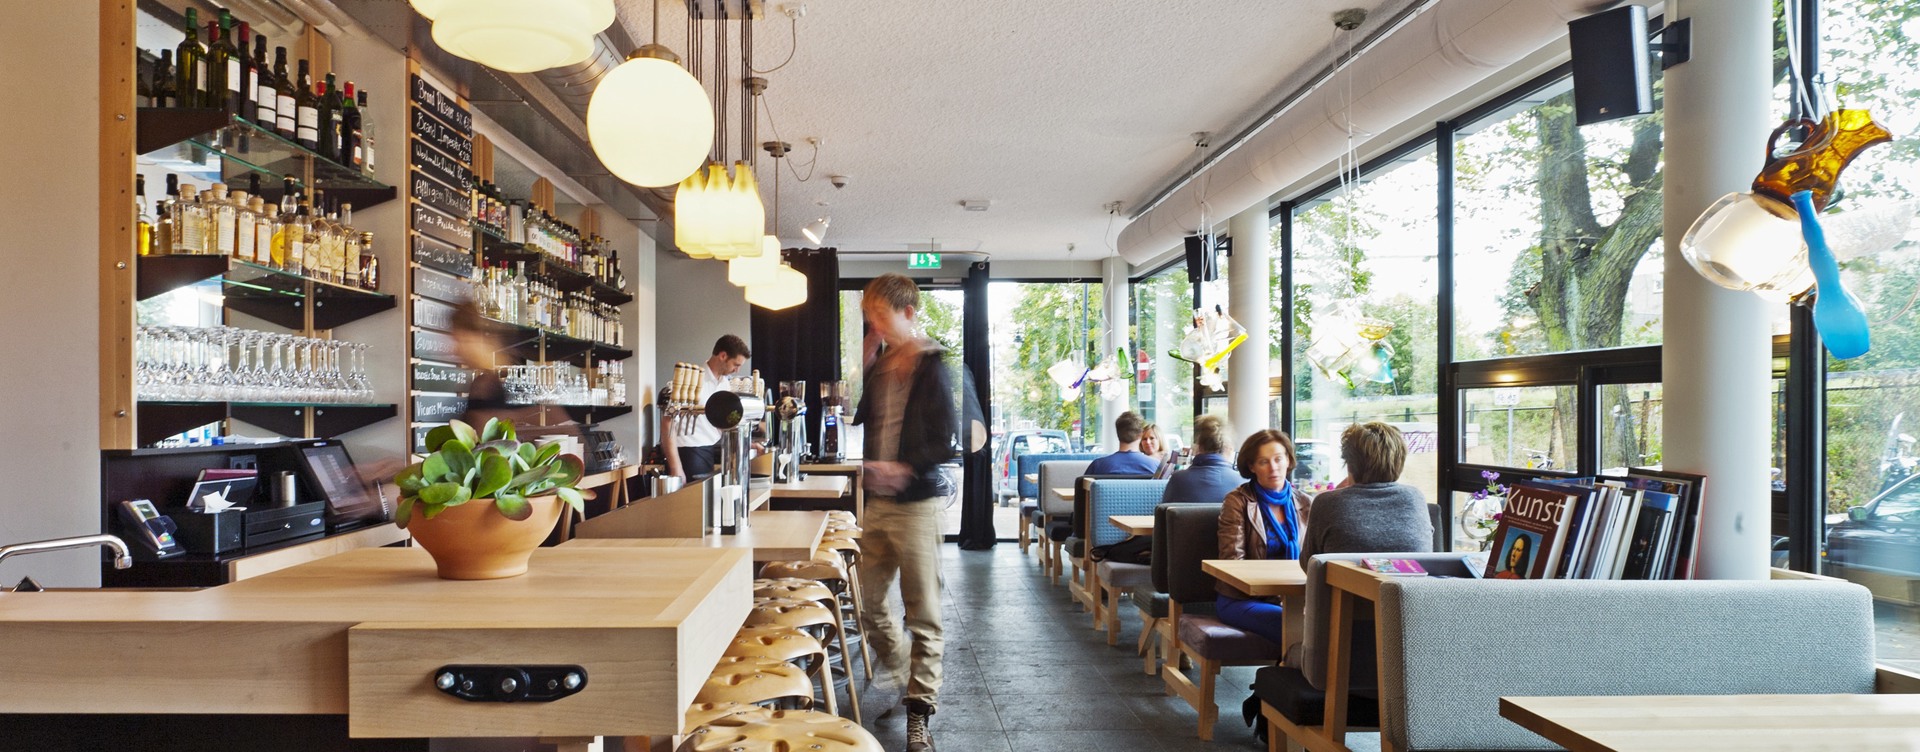 Café Caspar:
the modern lounge where Arnhem meets